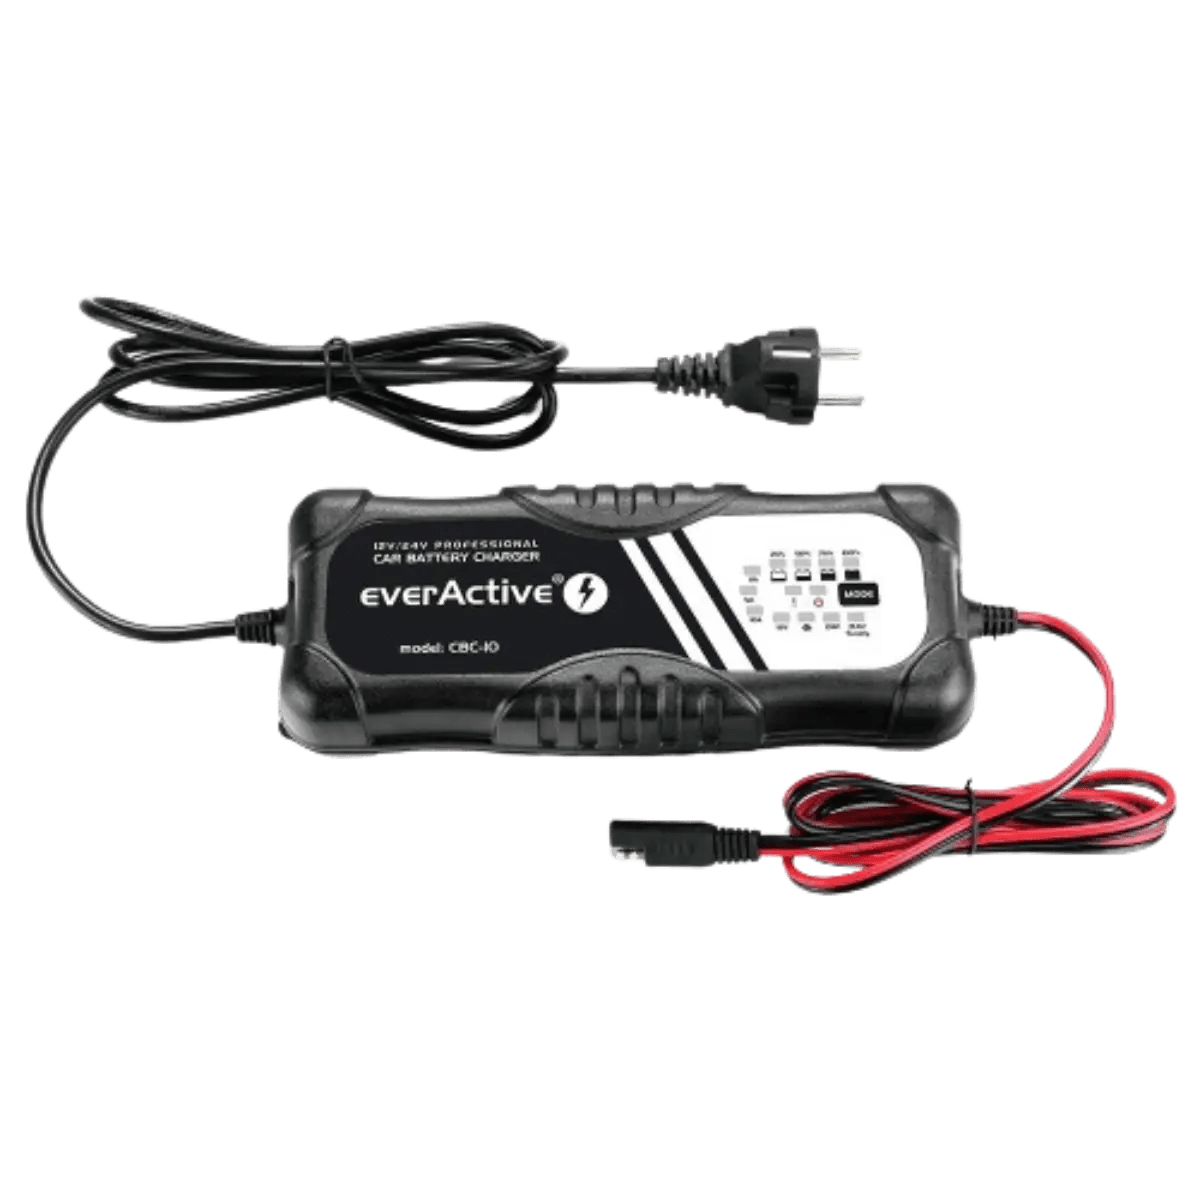 Generic Chargeur De Batterie 12V/24V, Intelligent, Type De